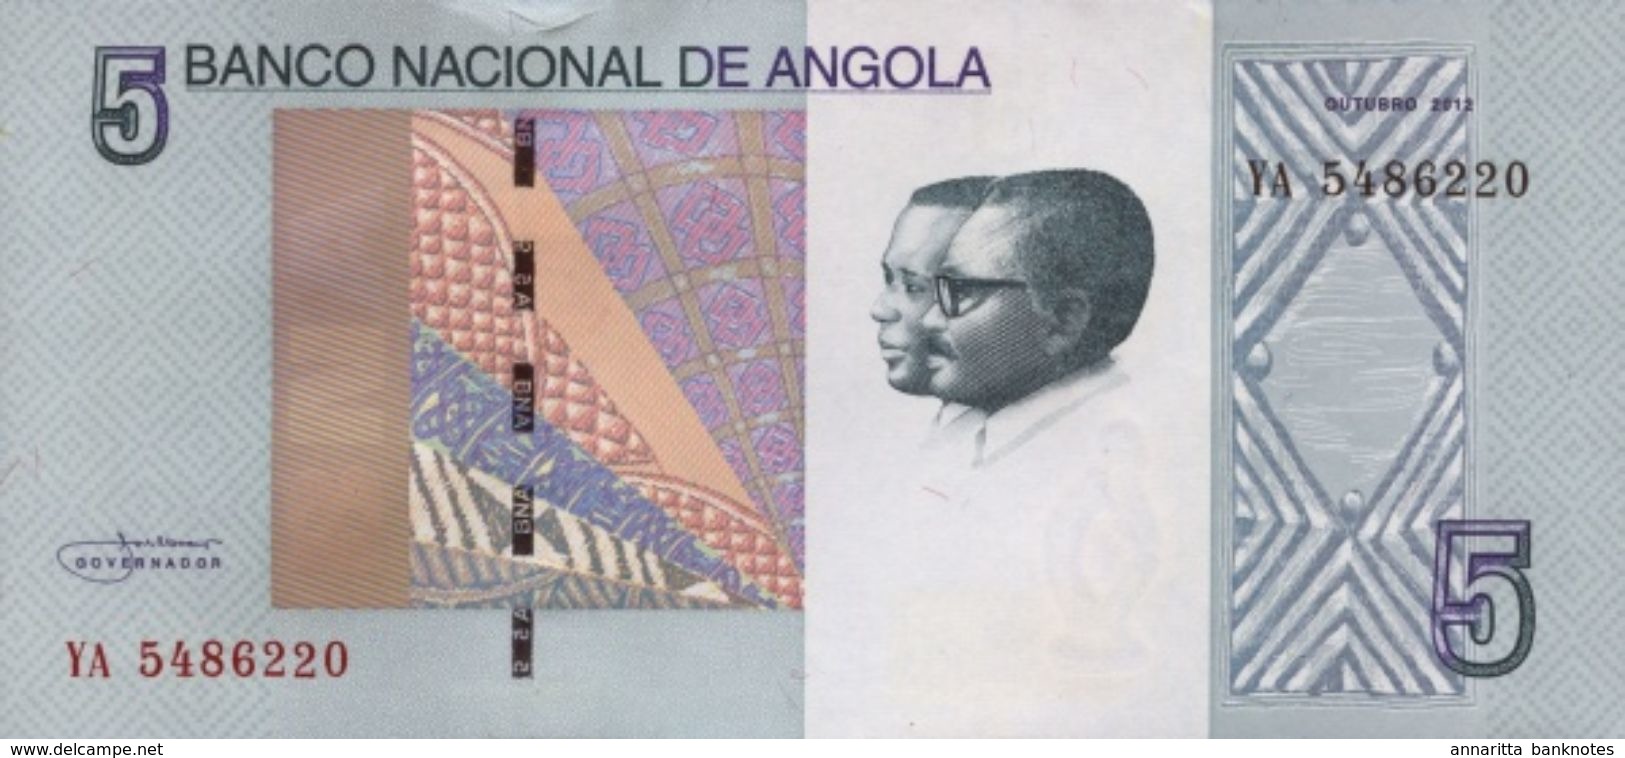 ANGOLA 5 KWANZAS 2012 (2017) P-NEW UNC  [AO550a] - Angola